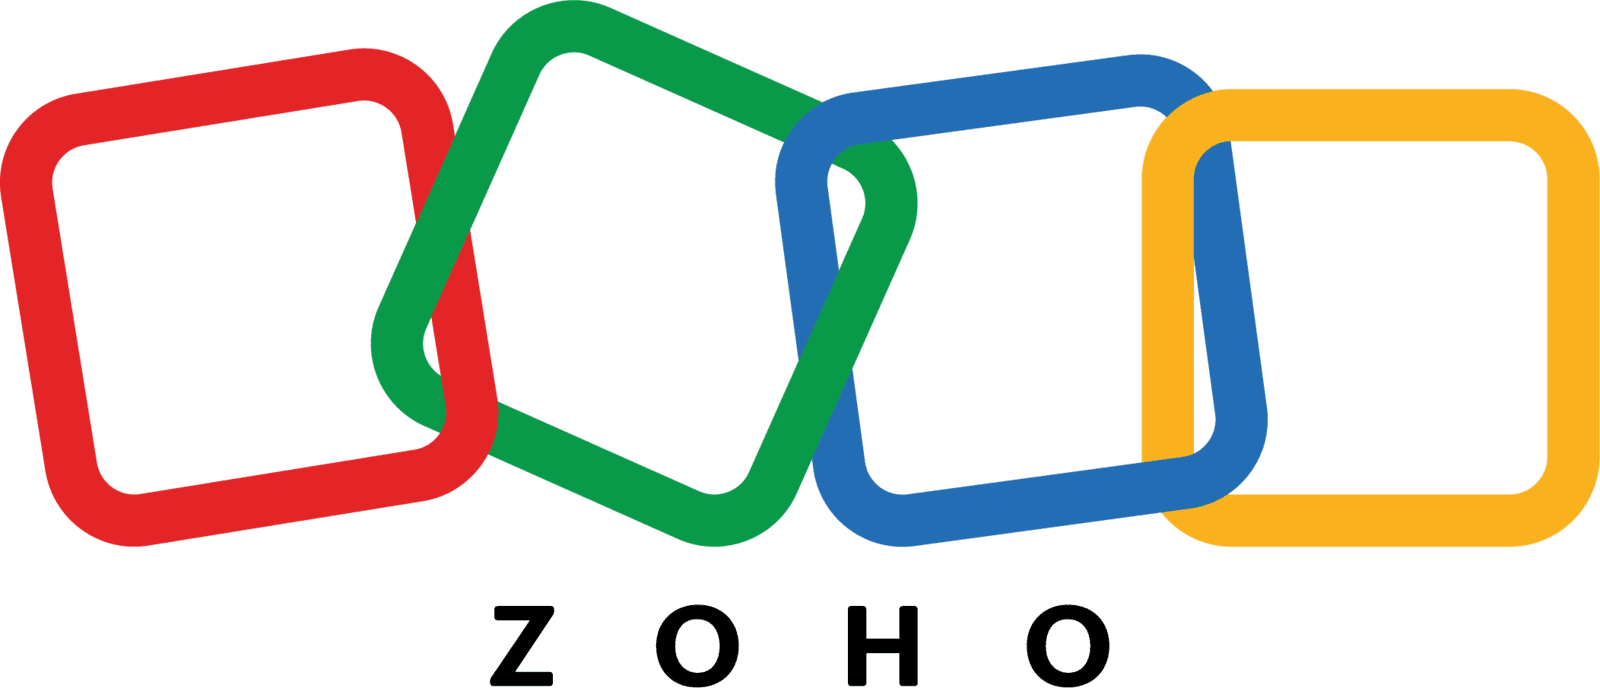 Zoho system